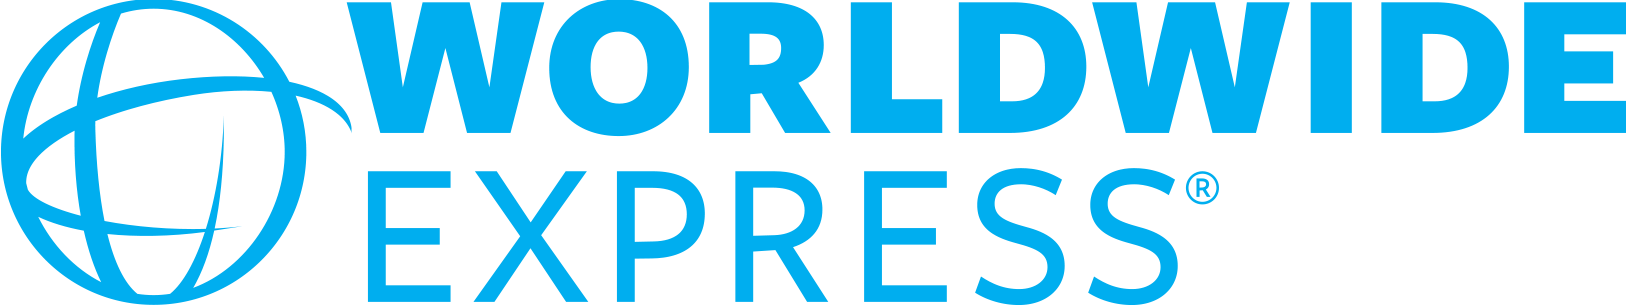 Worldwide Express logo